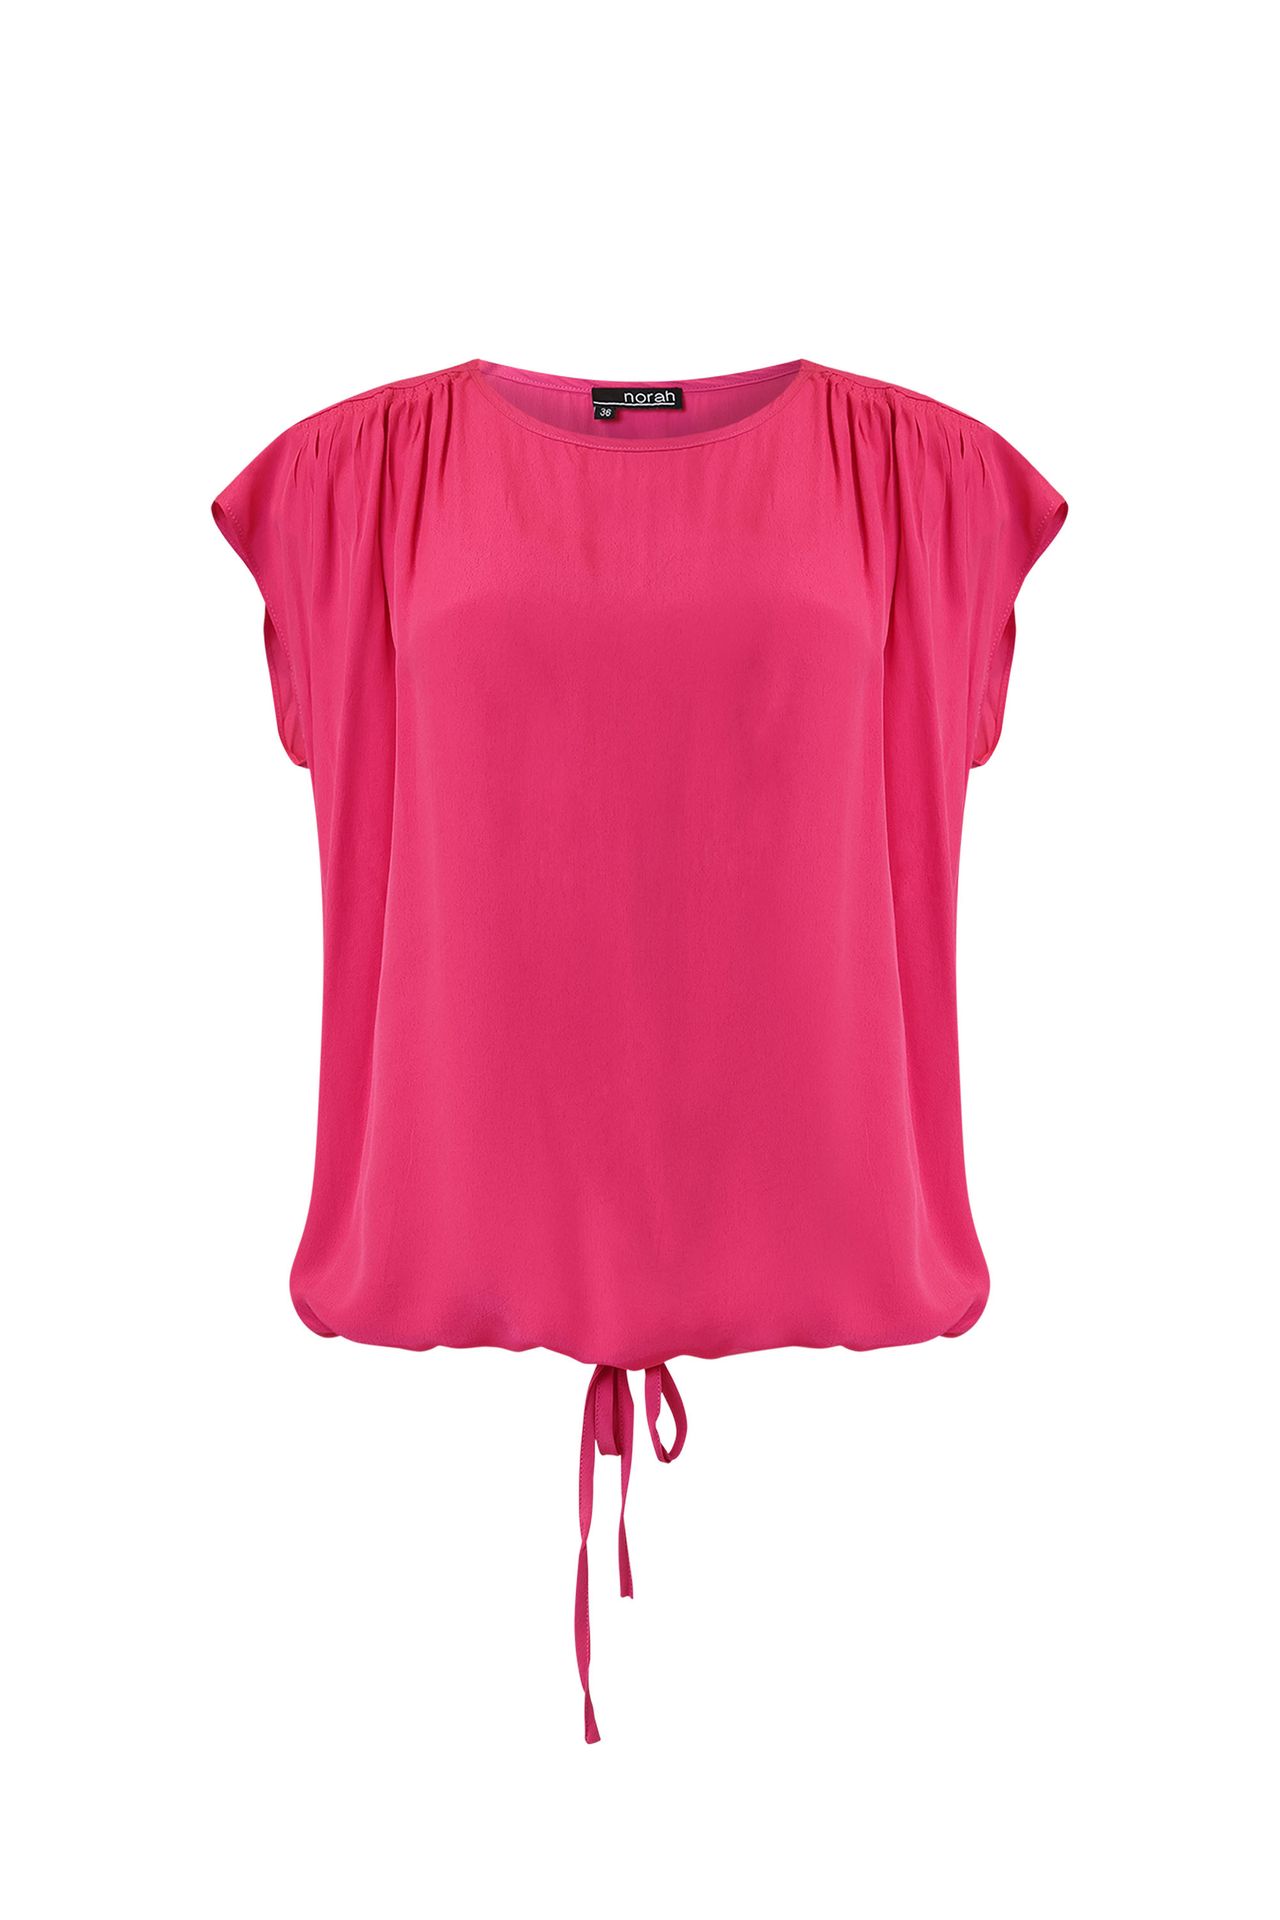 Norah Roze blouse pink 213836-900